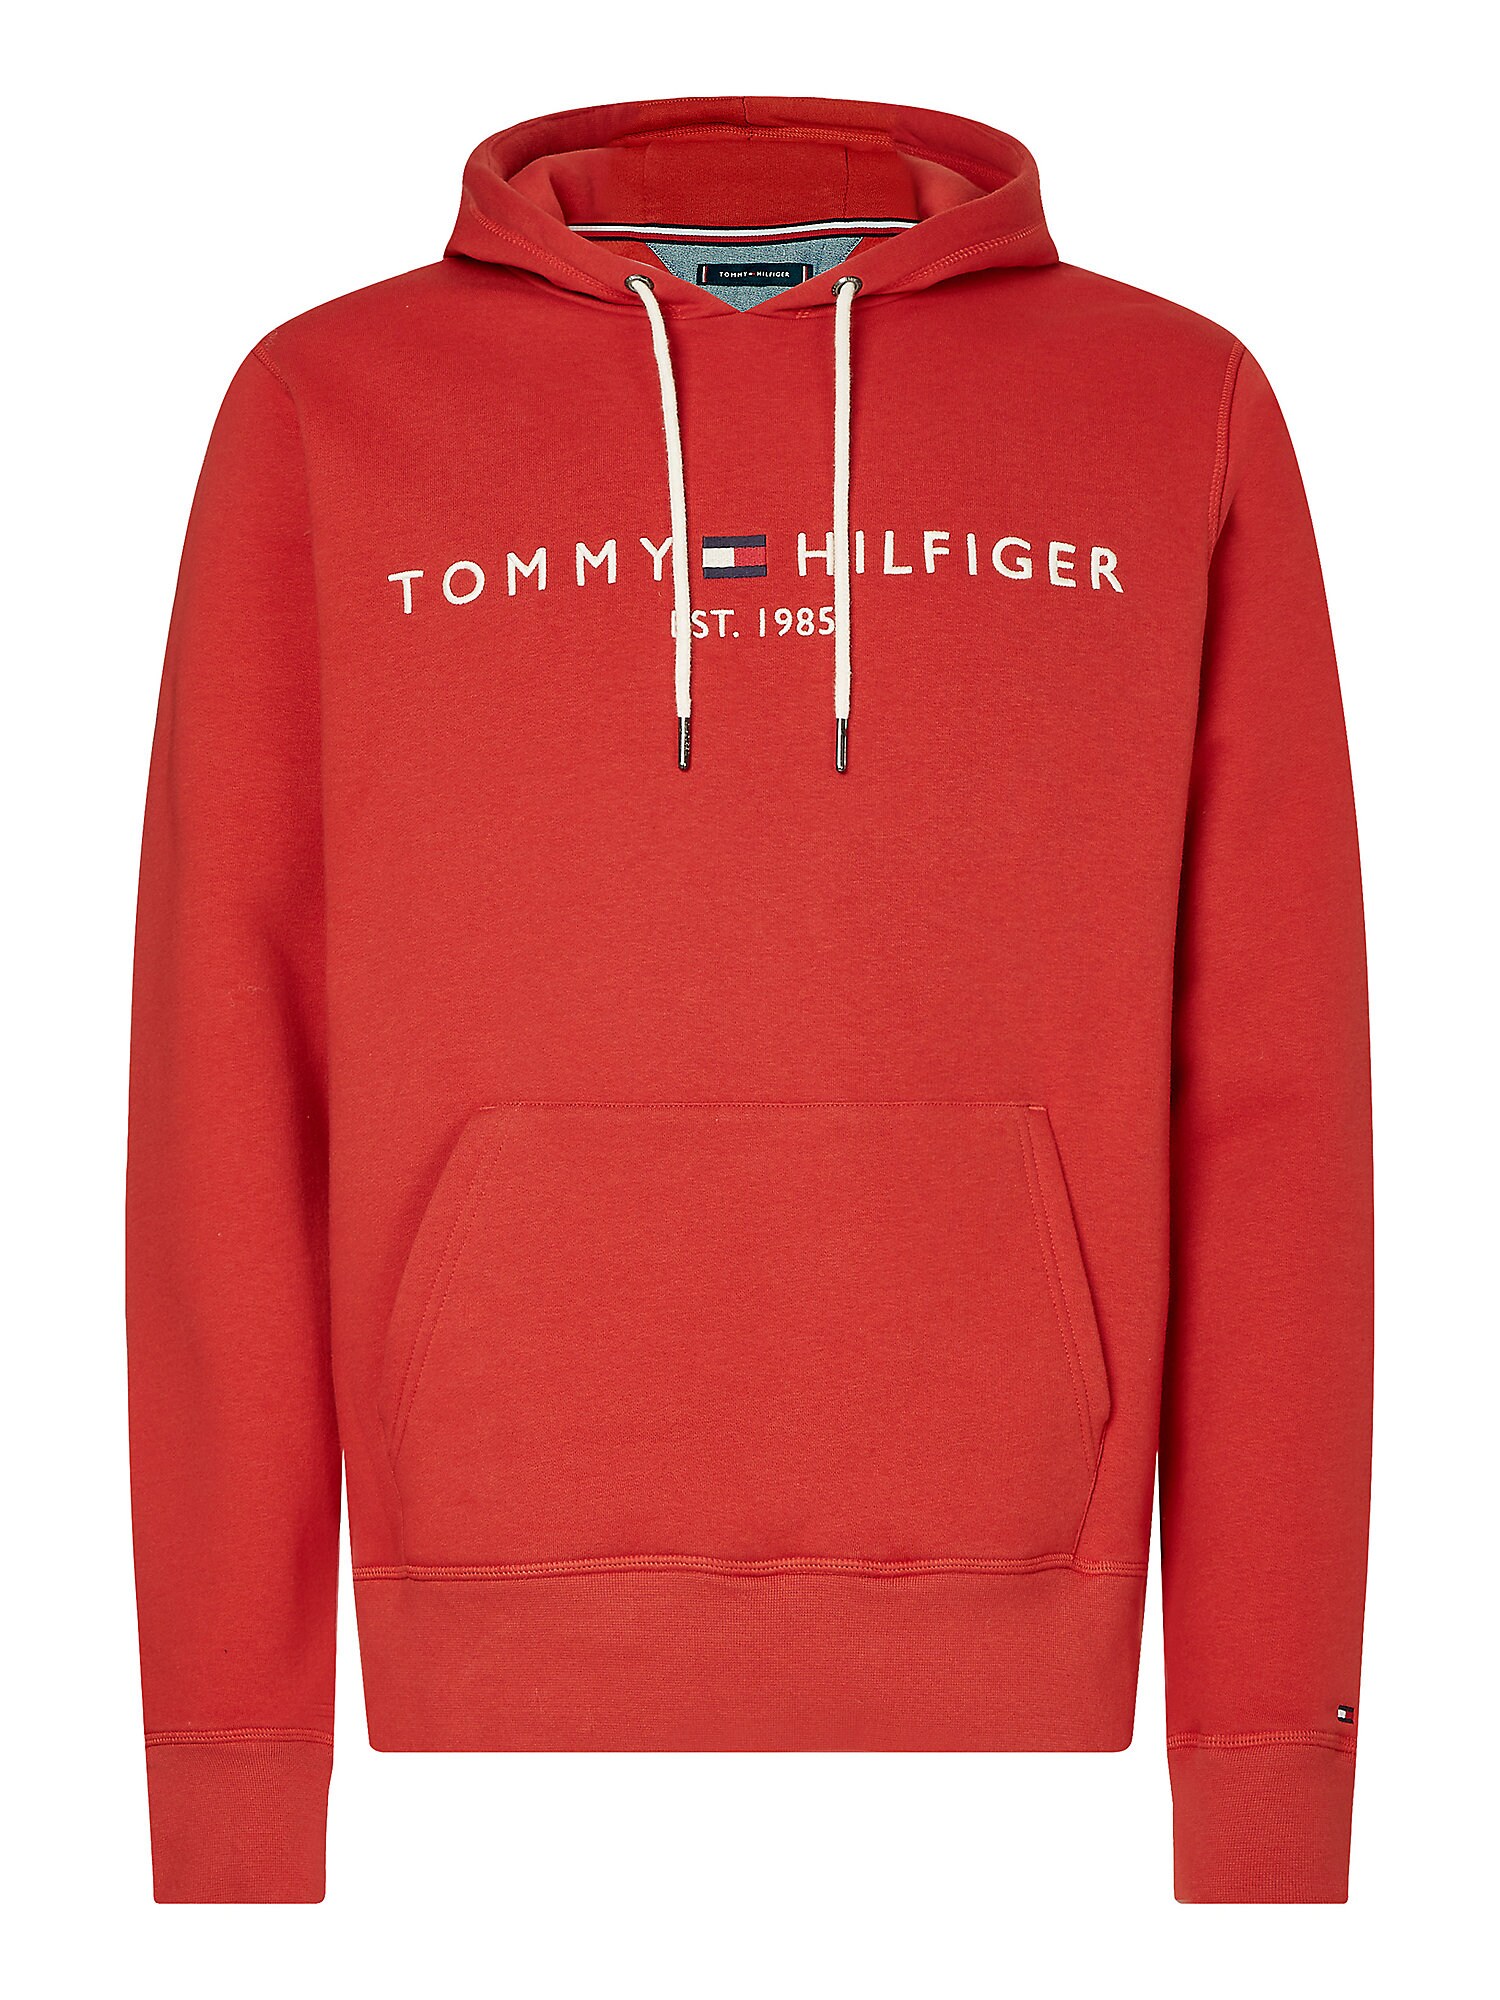 Tommy Hilfiger TOMMY HILFIGER Sweatshirt navy / bordeaux / weiß